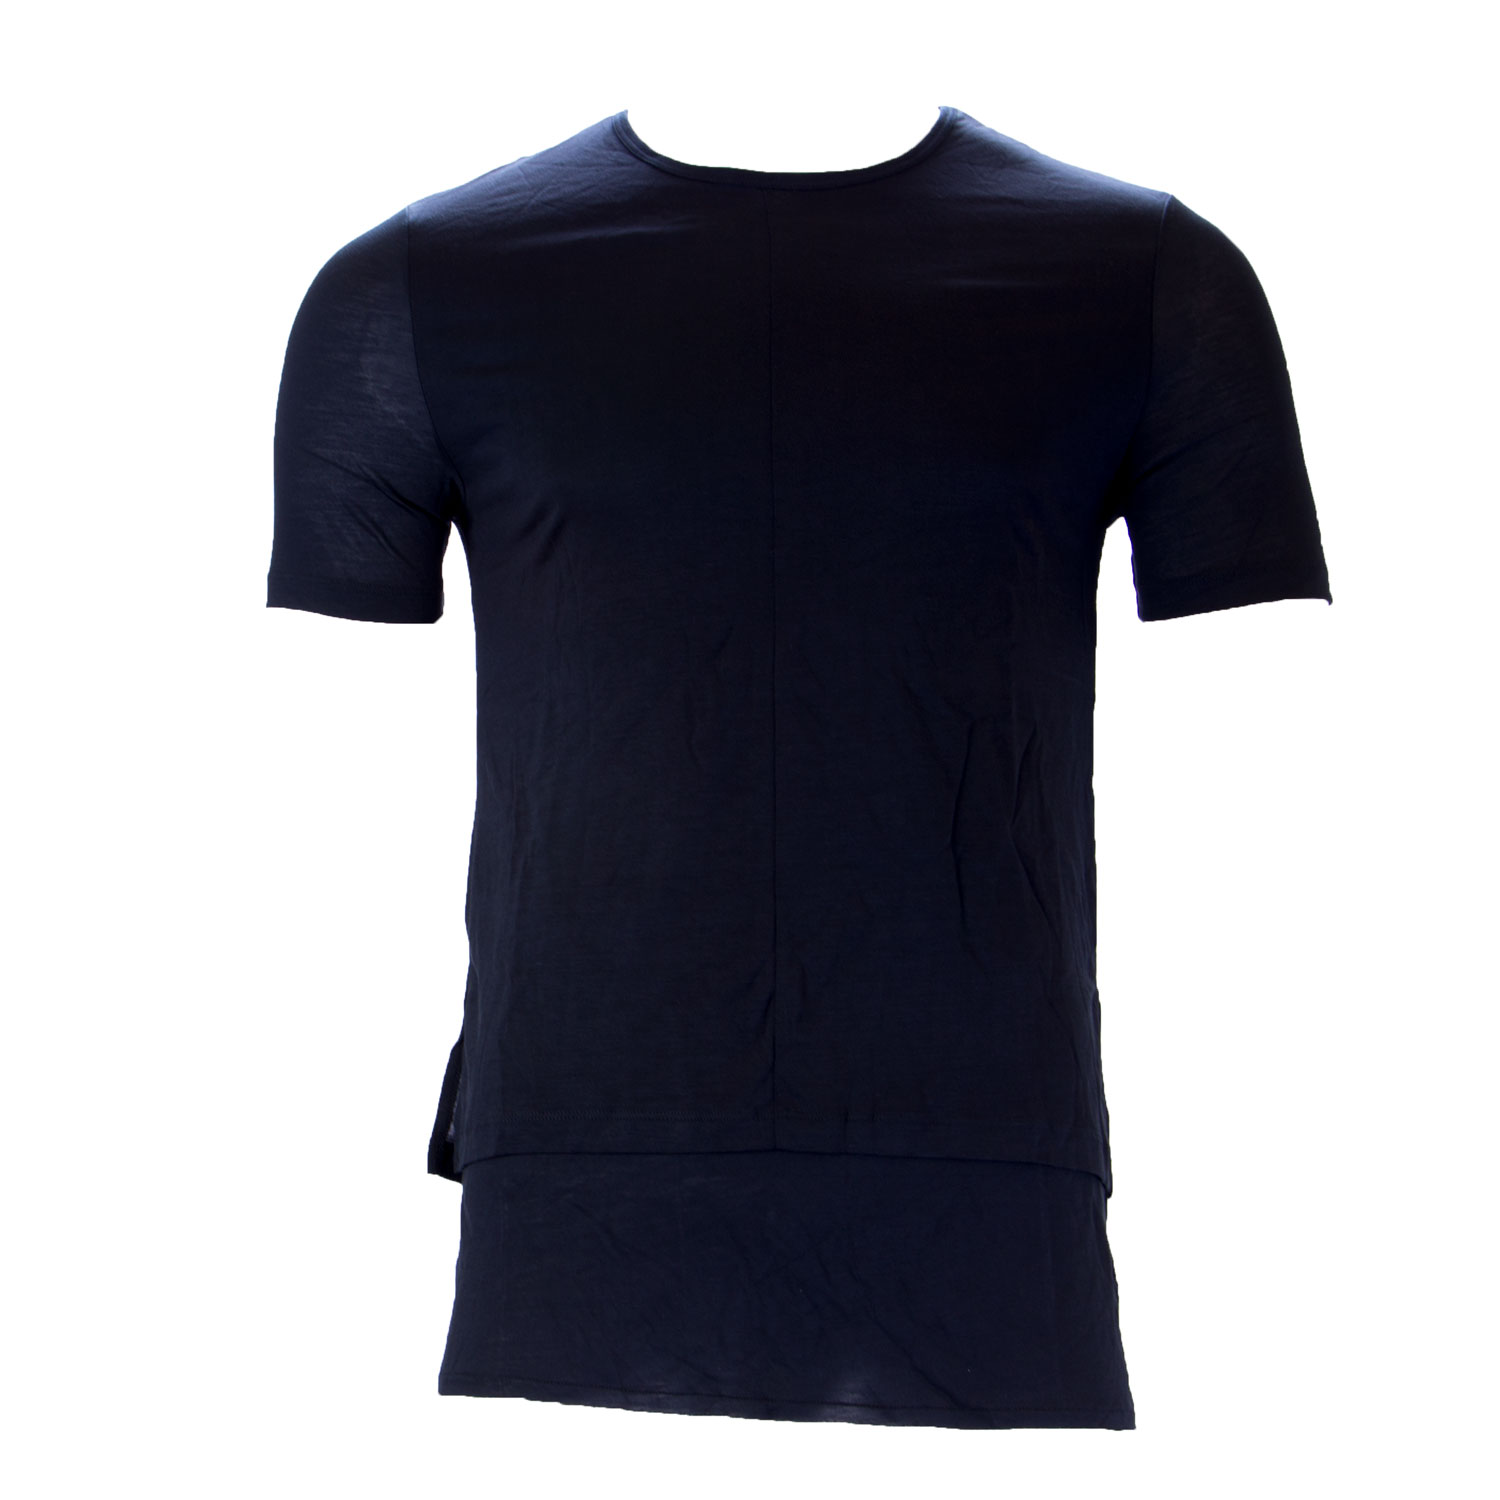 BLK DNM Men's Black Layered T-Shirt 71 #BMNJ11 X-Small $110 NWT | eBay